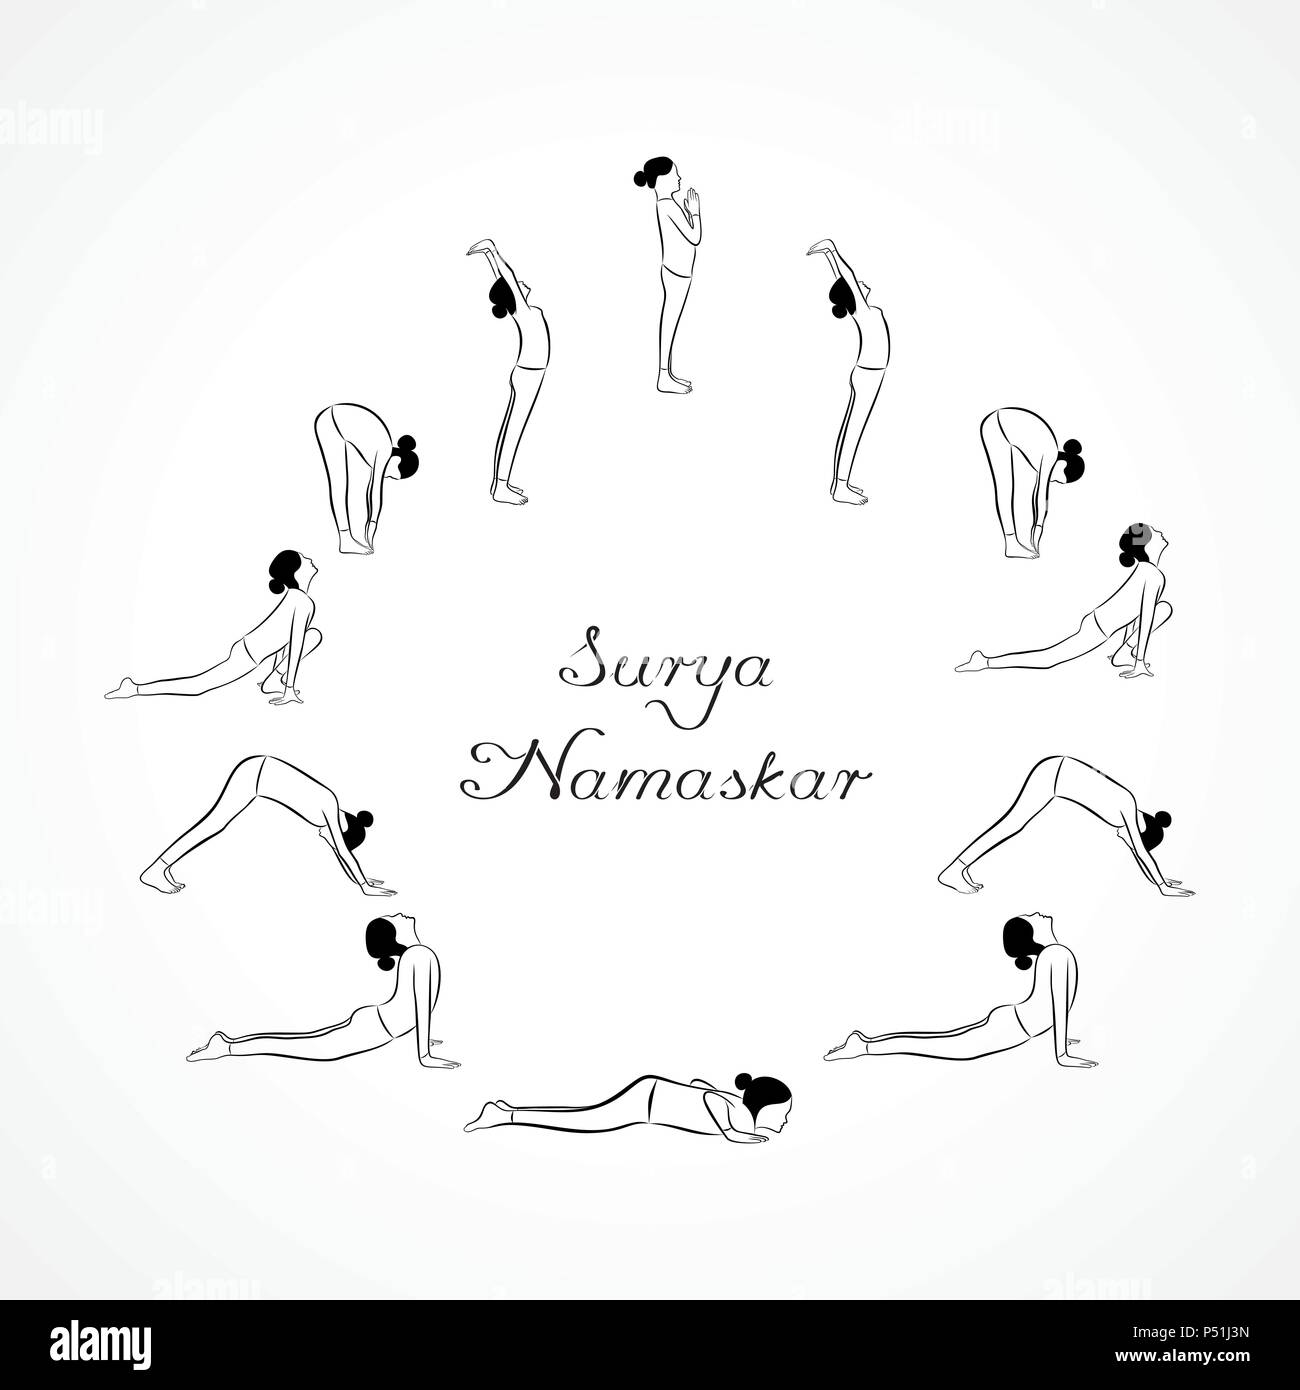 Surya Namaskar Yoga Poses:Amazon.com:Appstore for Android